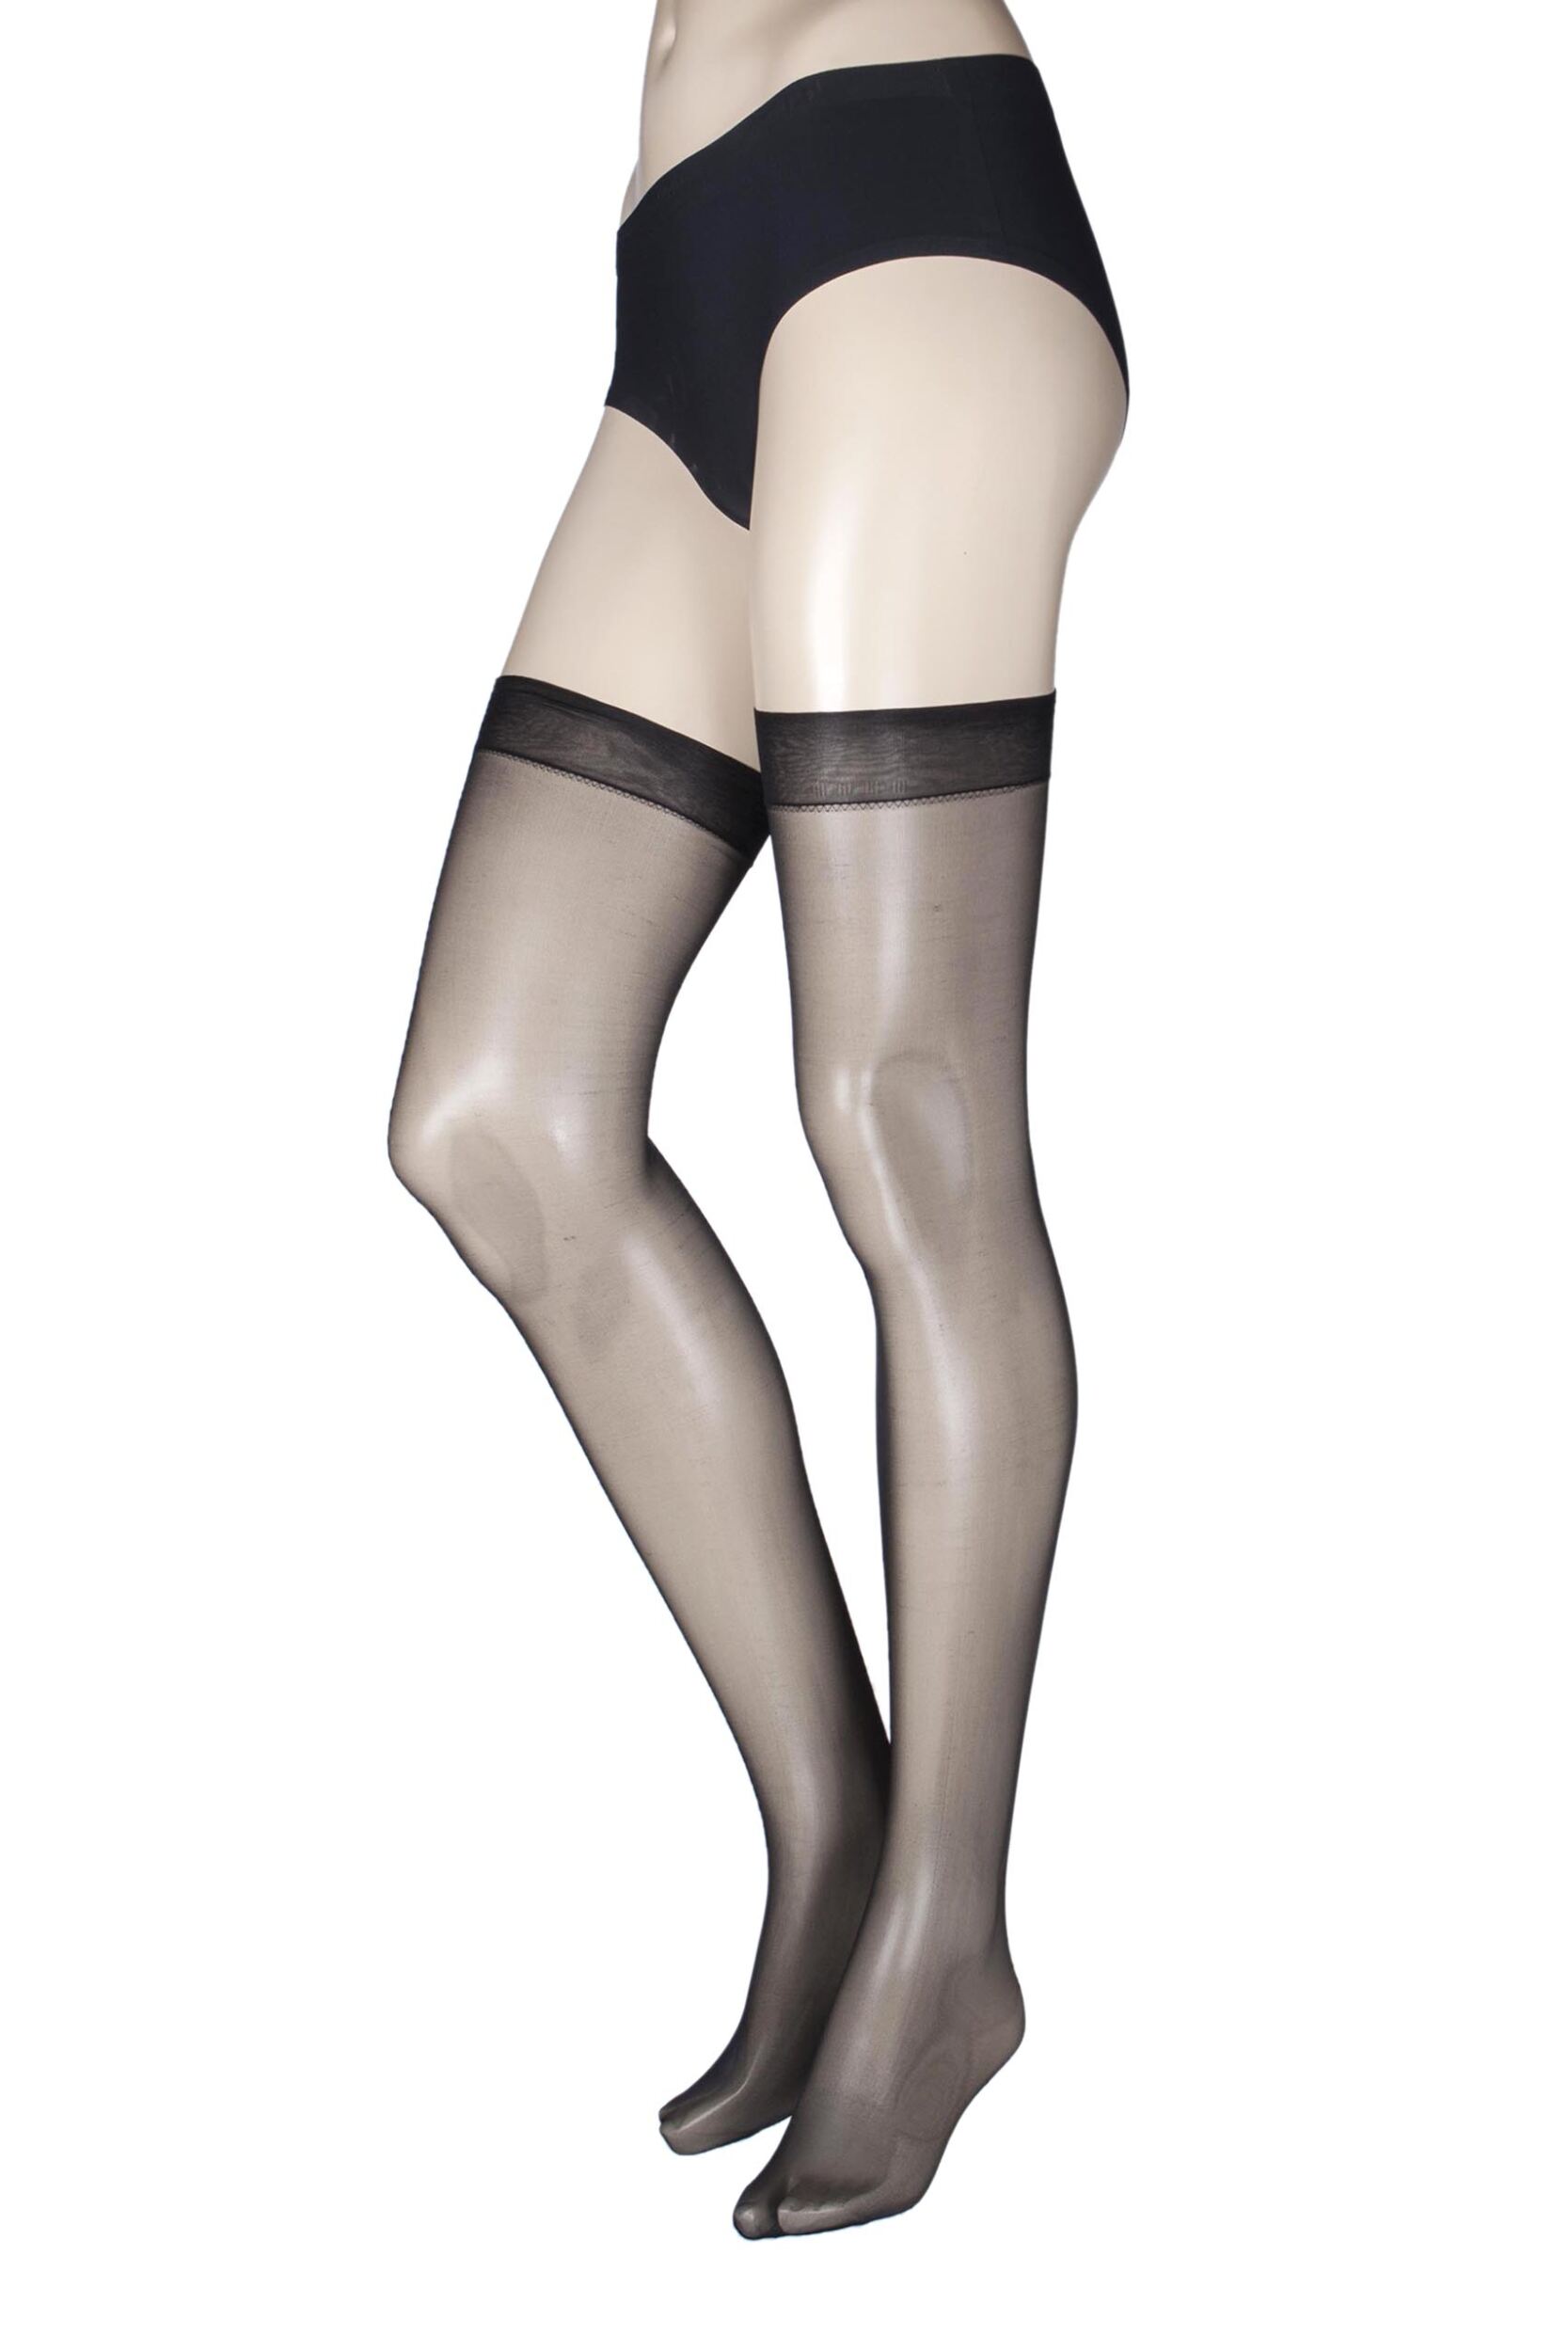 1 Pair Black High Shine Luxury Sheer Stockings - Up to XXXL Ladies One Size - Miss Naughty